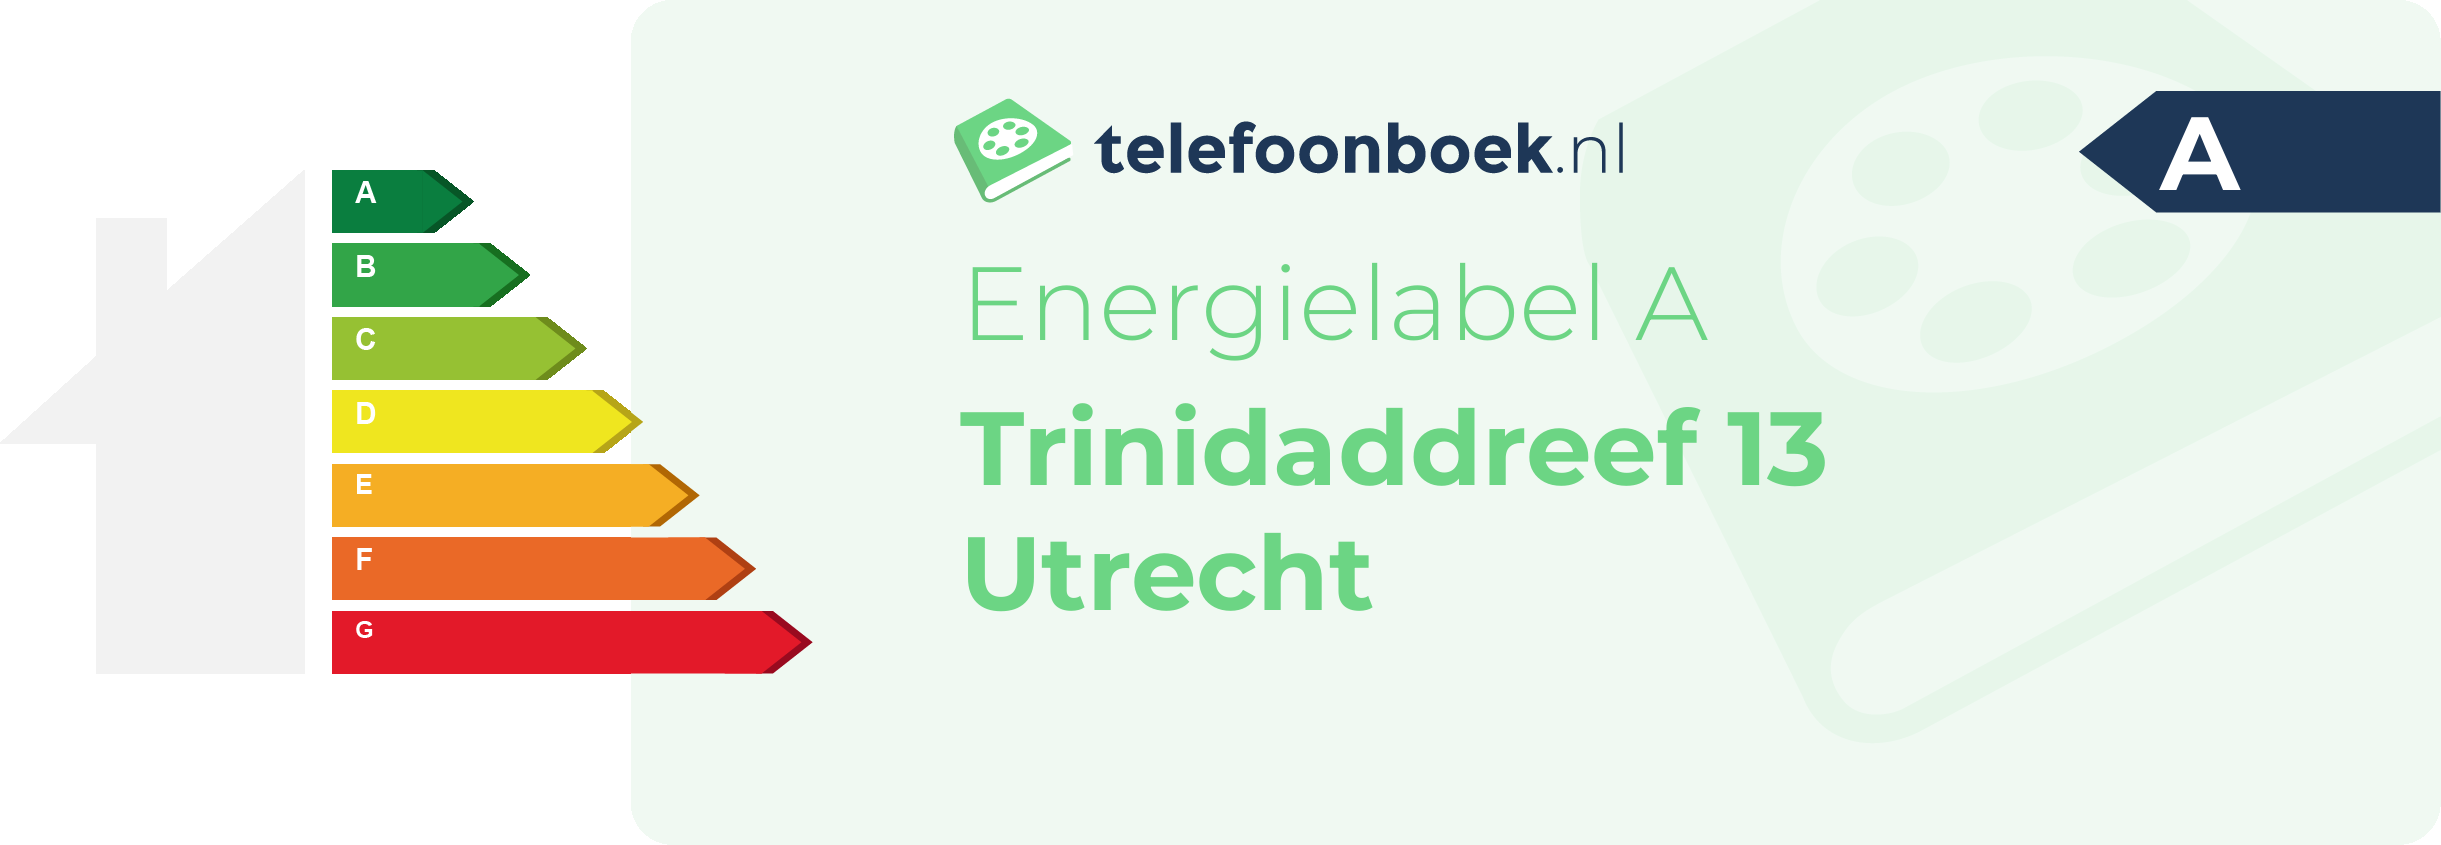 Energielabel Trinidaddreef 13 Utrecht